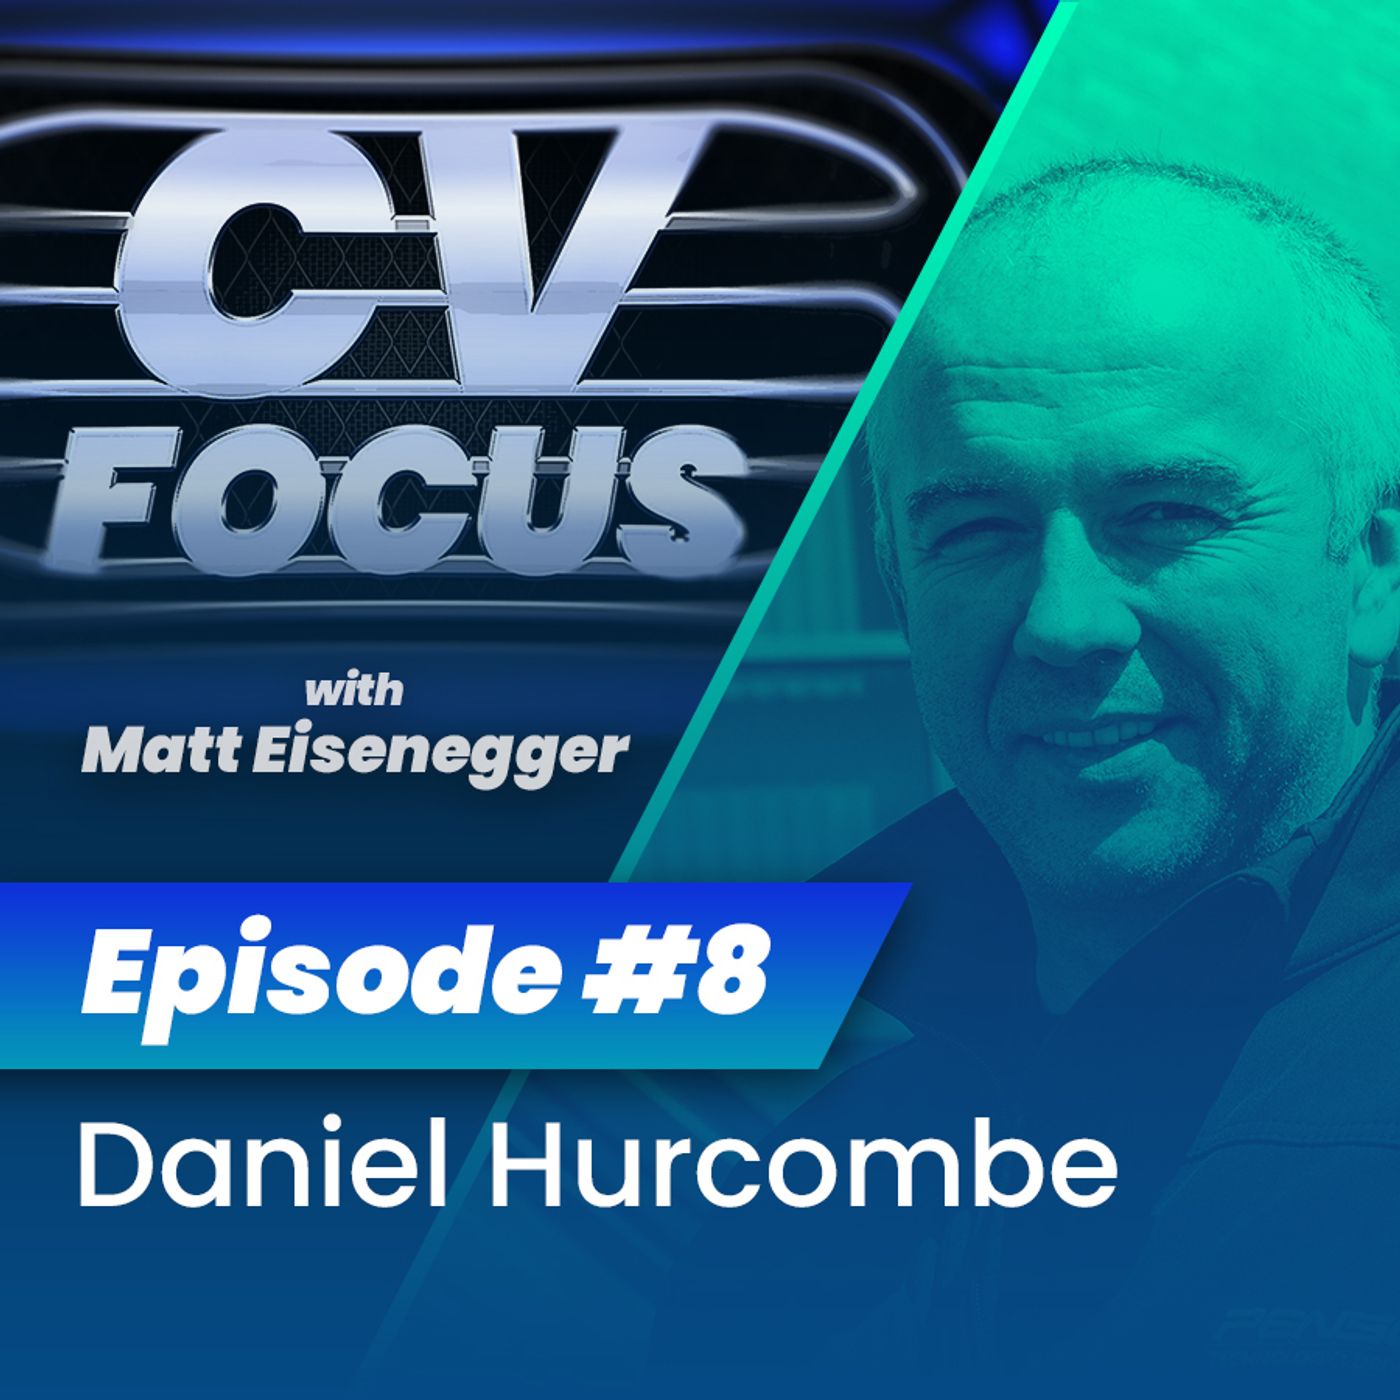 8: CV Focus episode 8 - Daniel Hurcombe